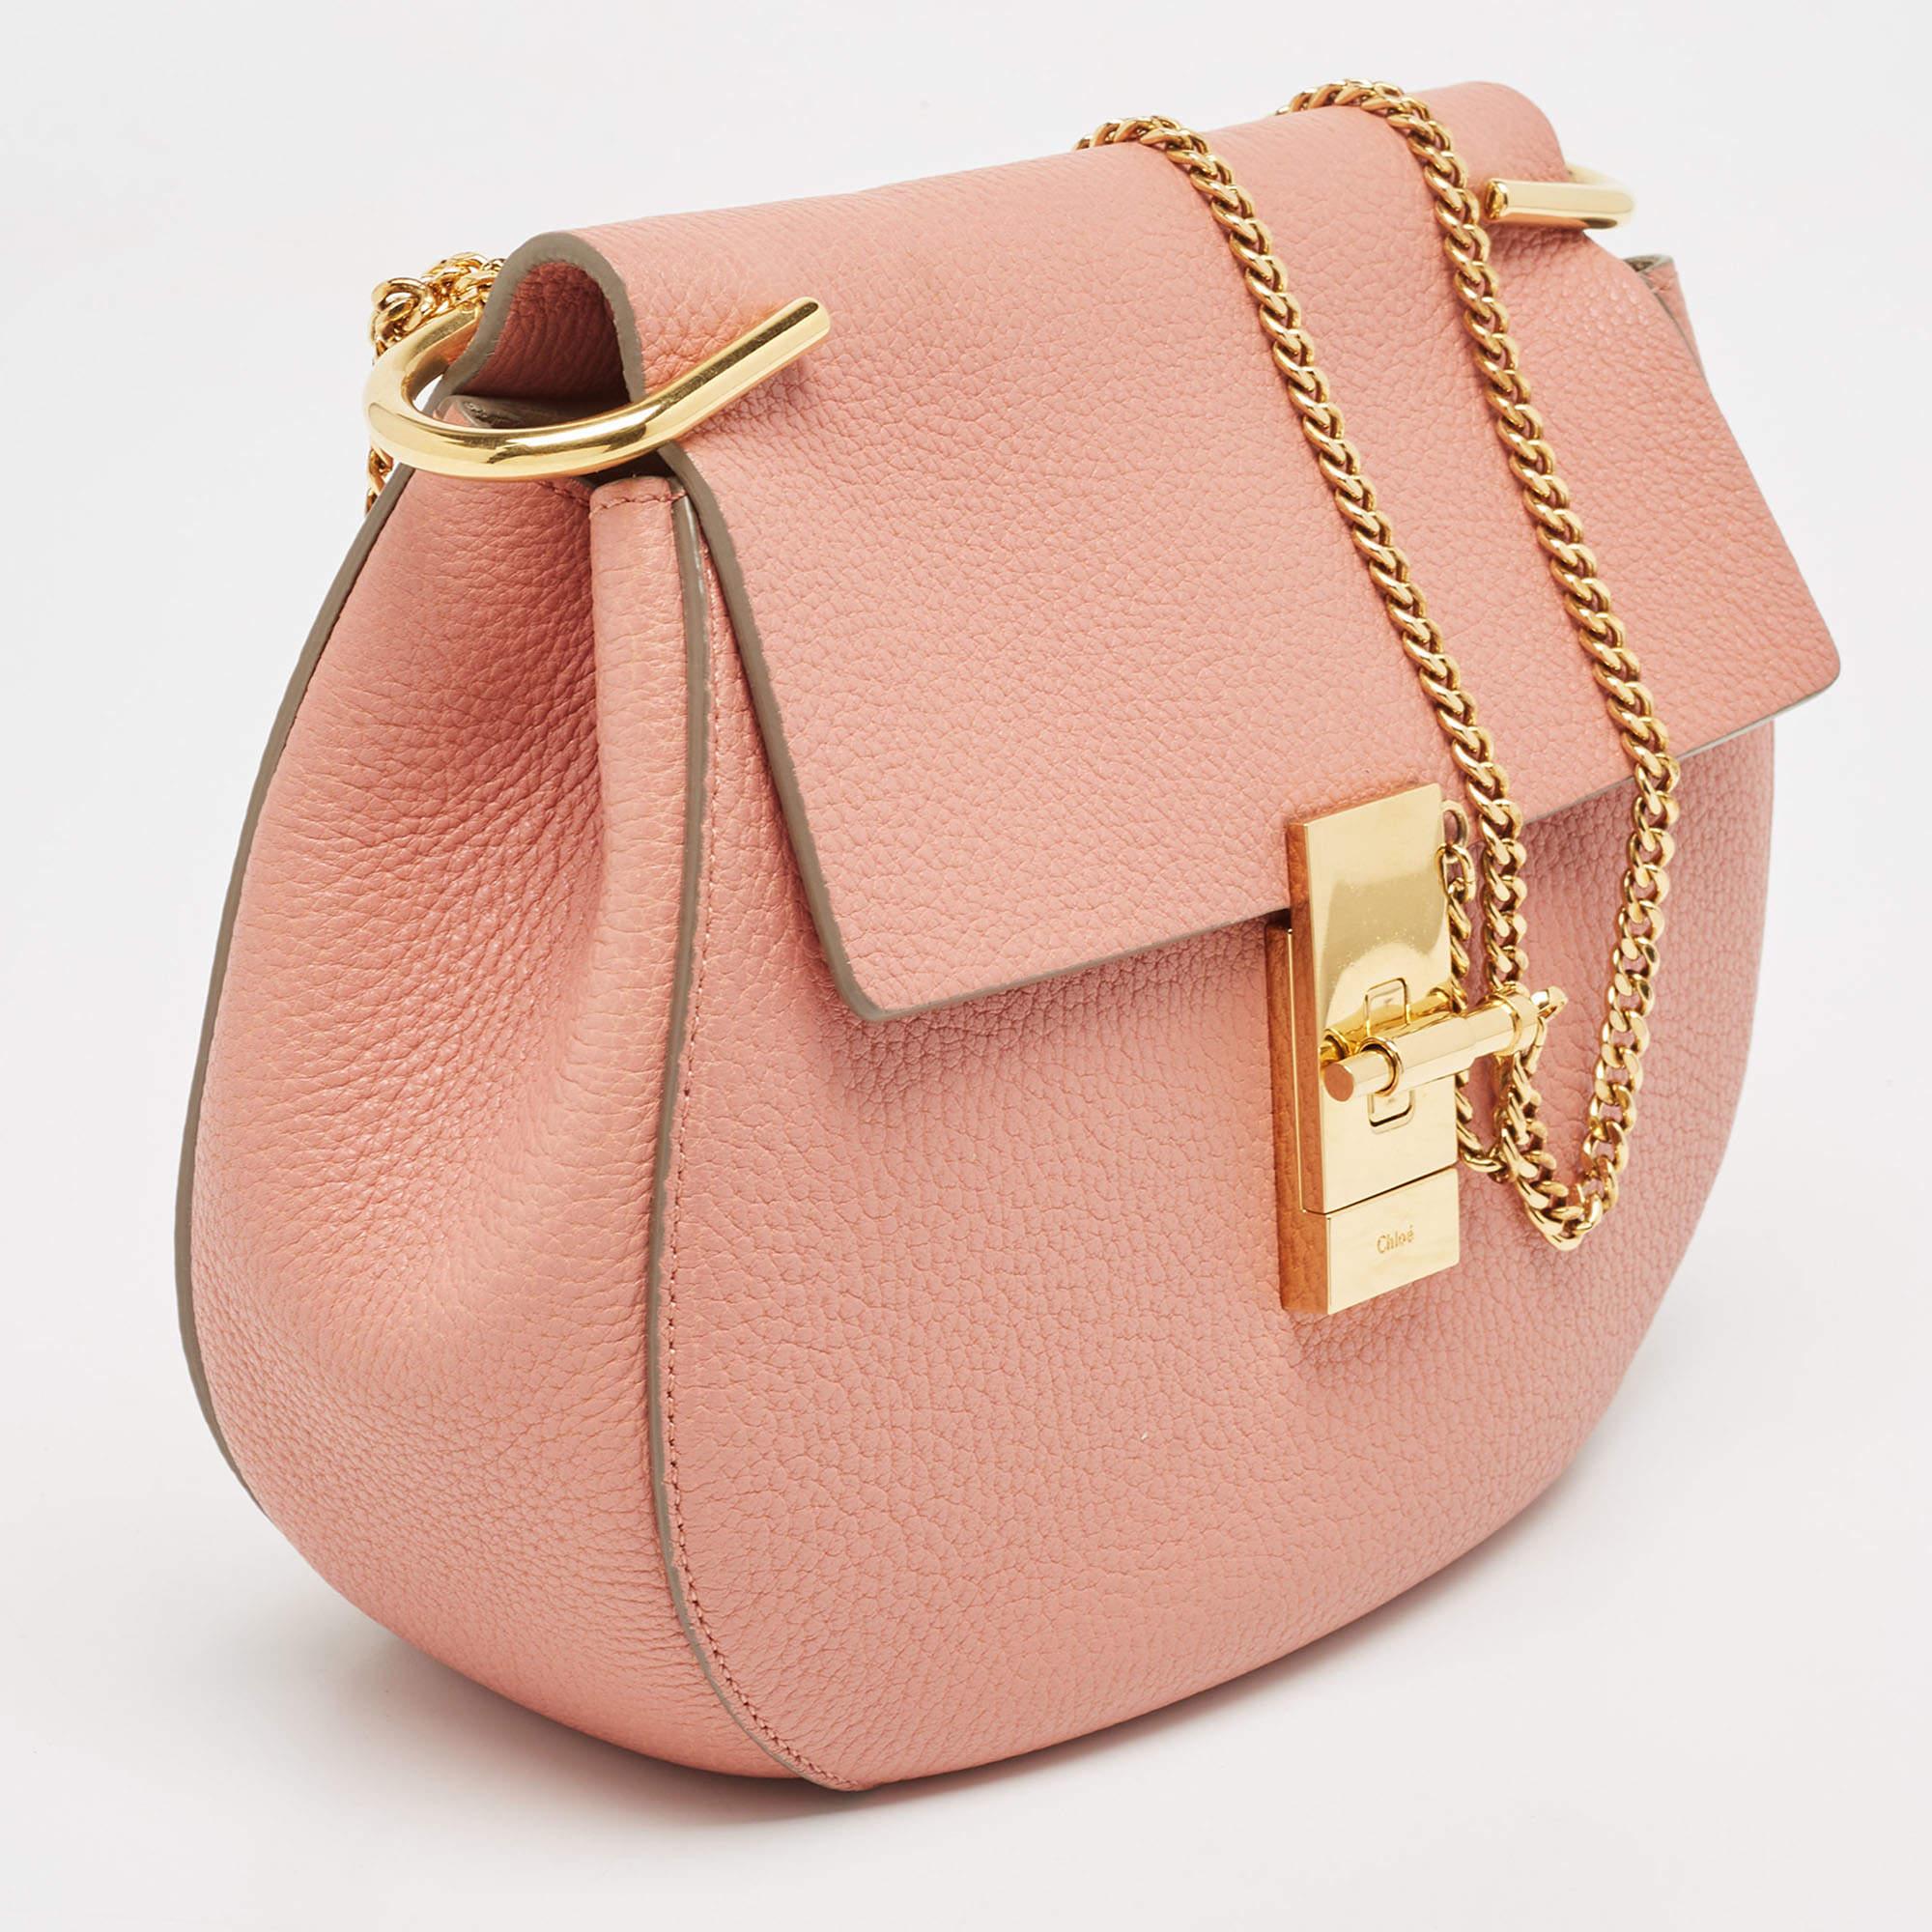 Chloe Salmon Pink Leather Medium Drew Shoulder Bag In Good Condition For Sale In Dubai, Al Qouz 2